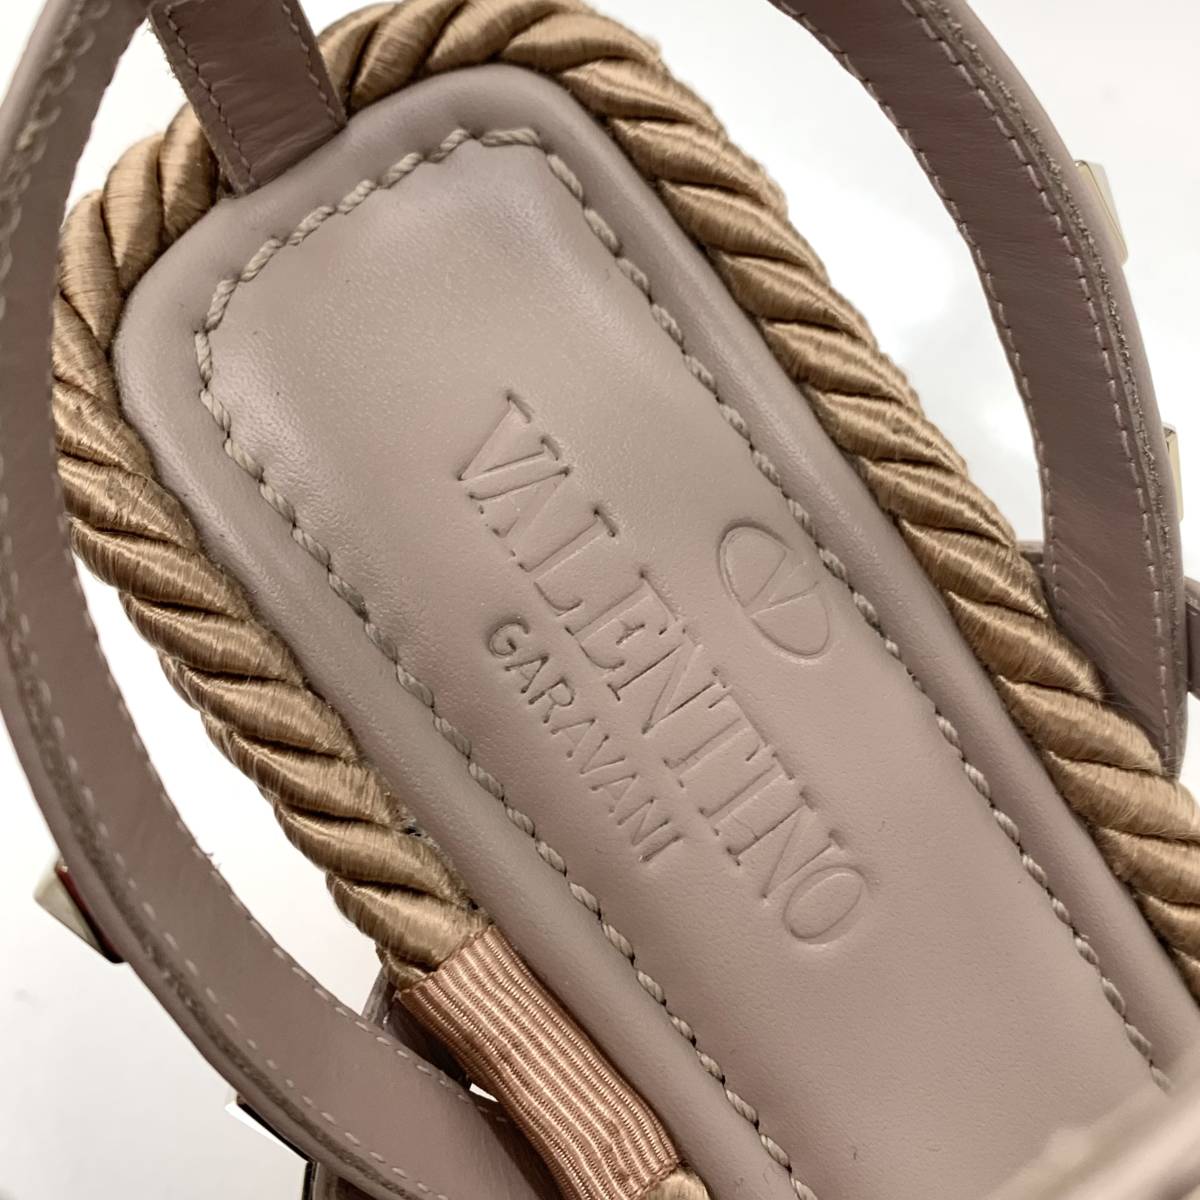 7190 Valentino lock studs leather Wedge sole sandals pink beige 